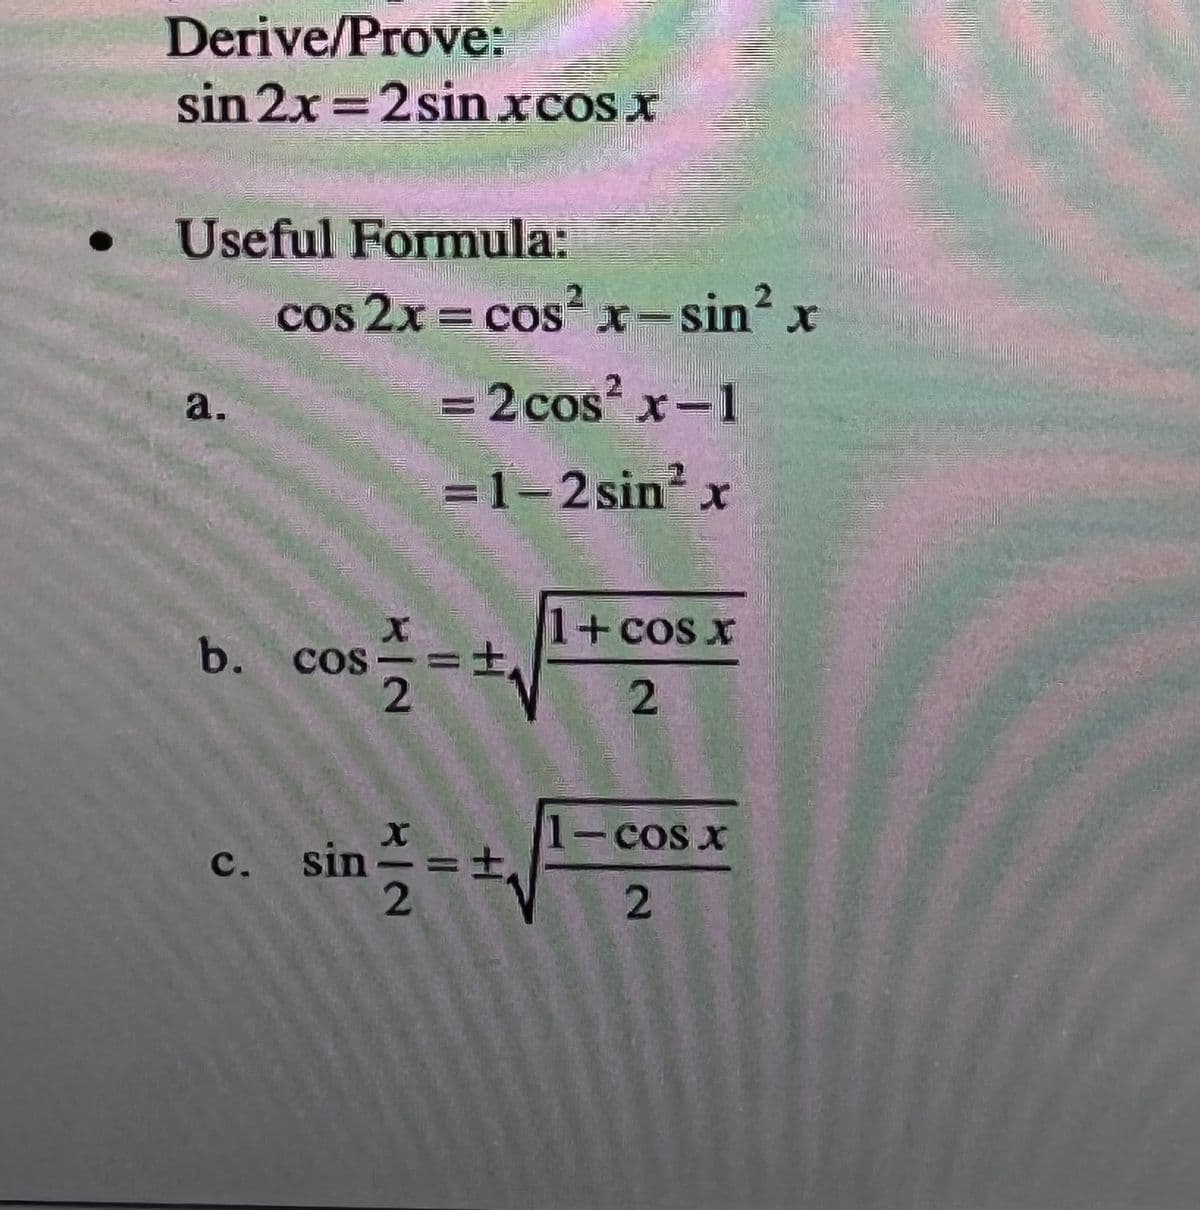 Derive/Prove:
sin 2x = 2 sin xcos x
%3D
Useful Formula:
cos 2x = cos x-sin x
=2 cos x-1
a.
|
=1-2 sin? x
1+Cos x
b. cos
- COS X
c. sin-
2
